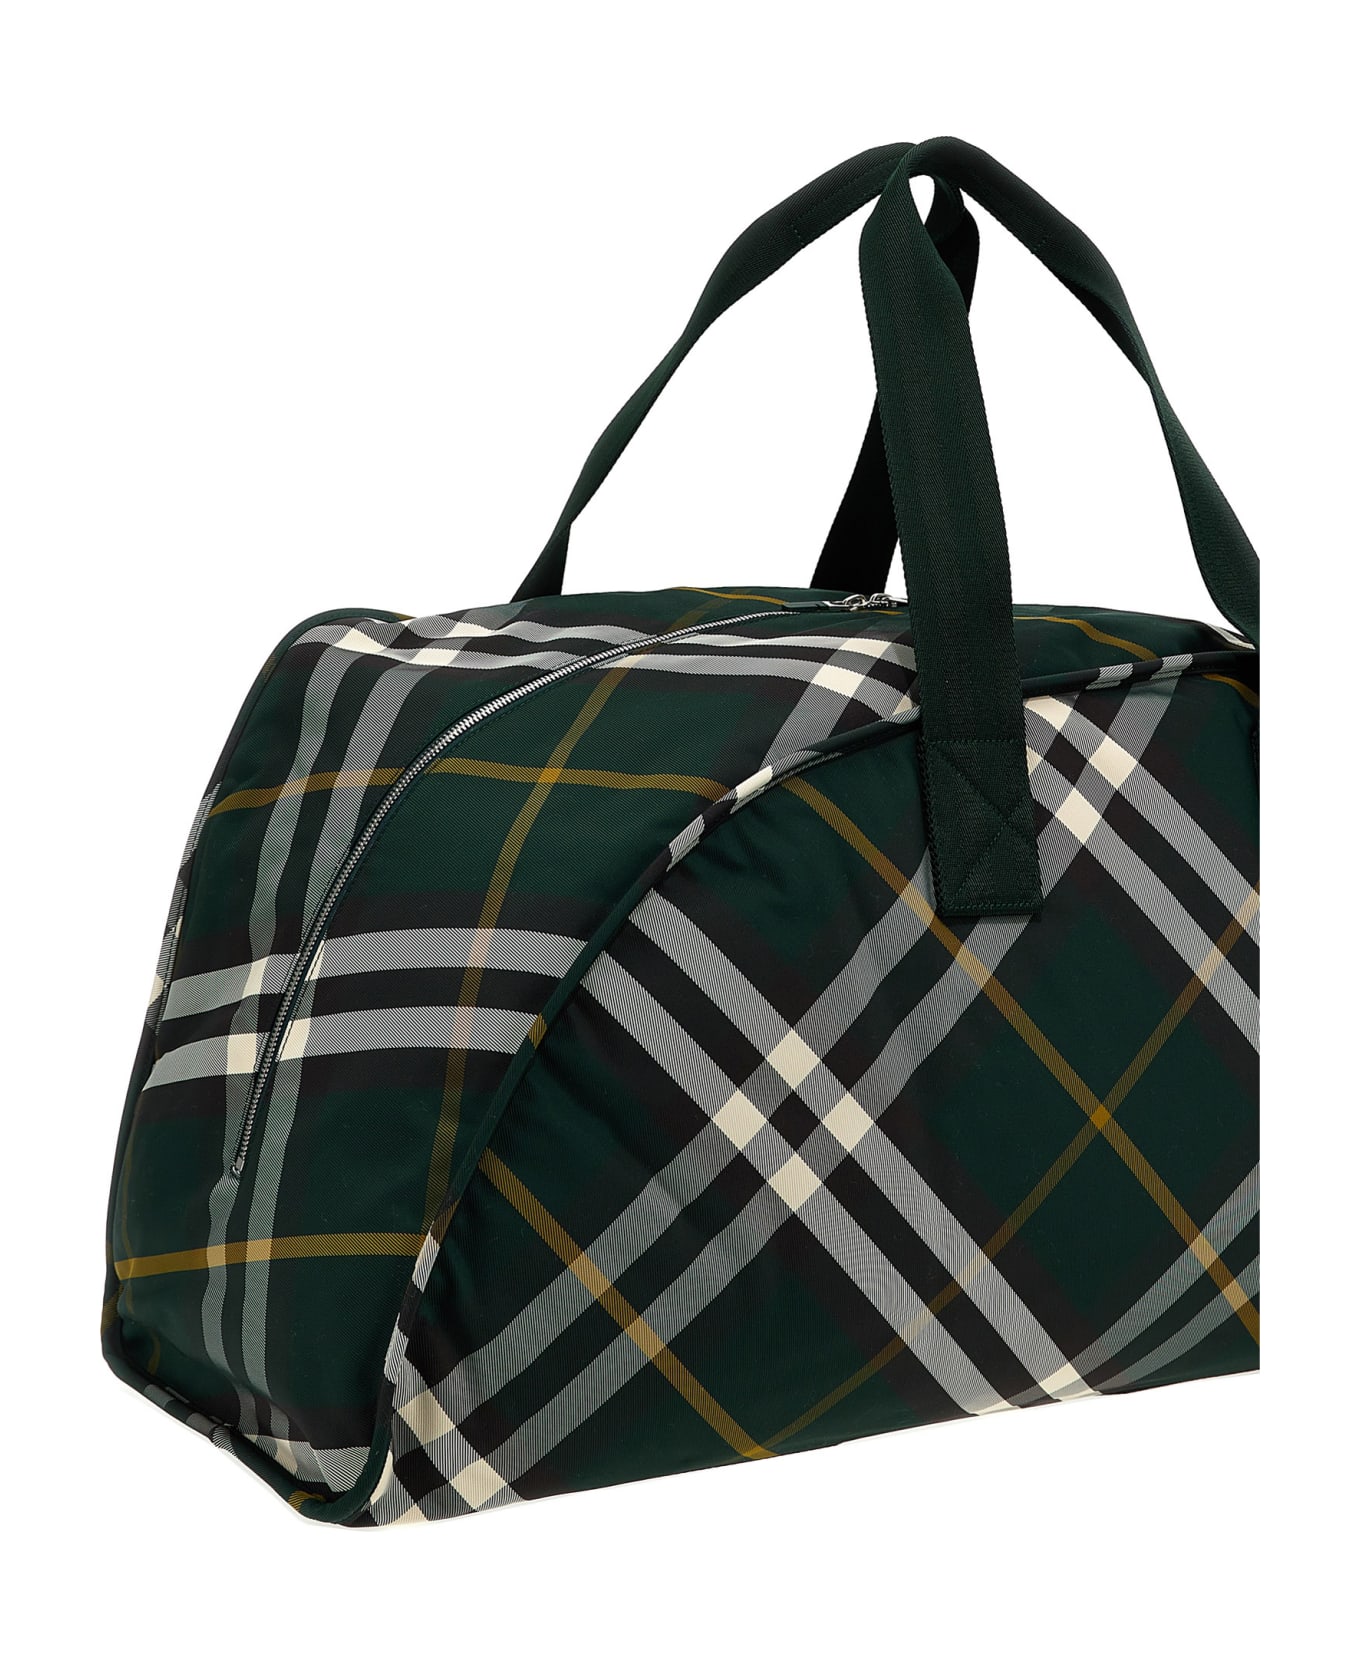 Burberry 'shield' Large Travel Bag - Green